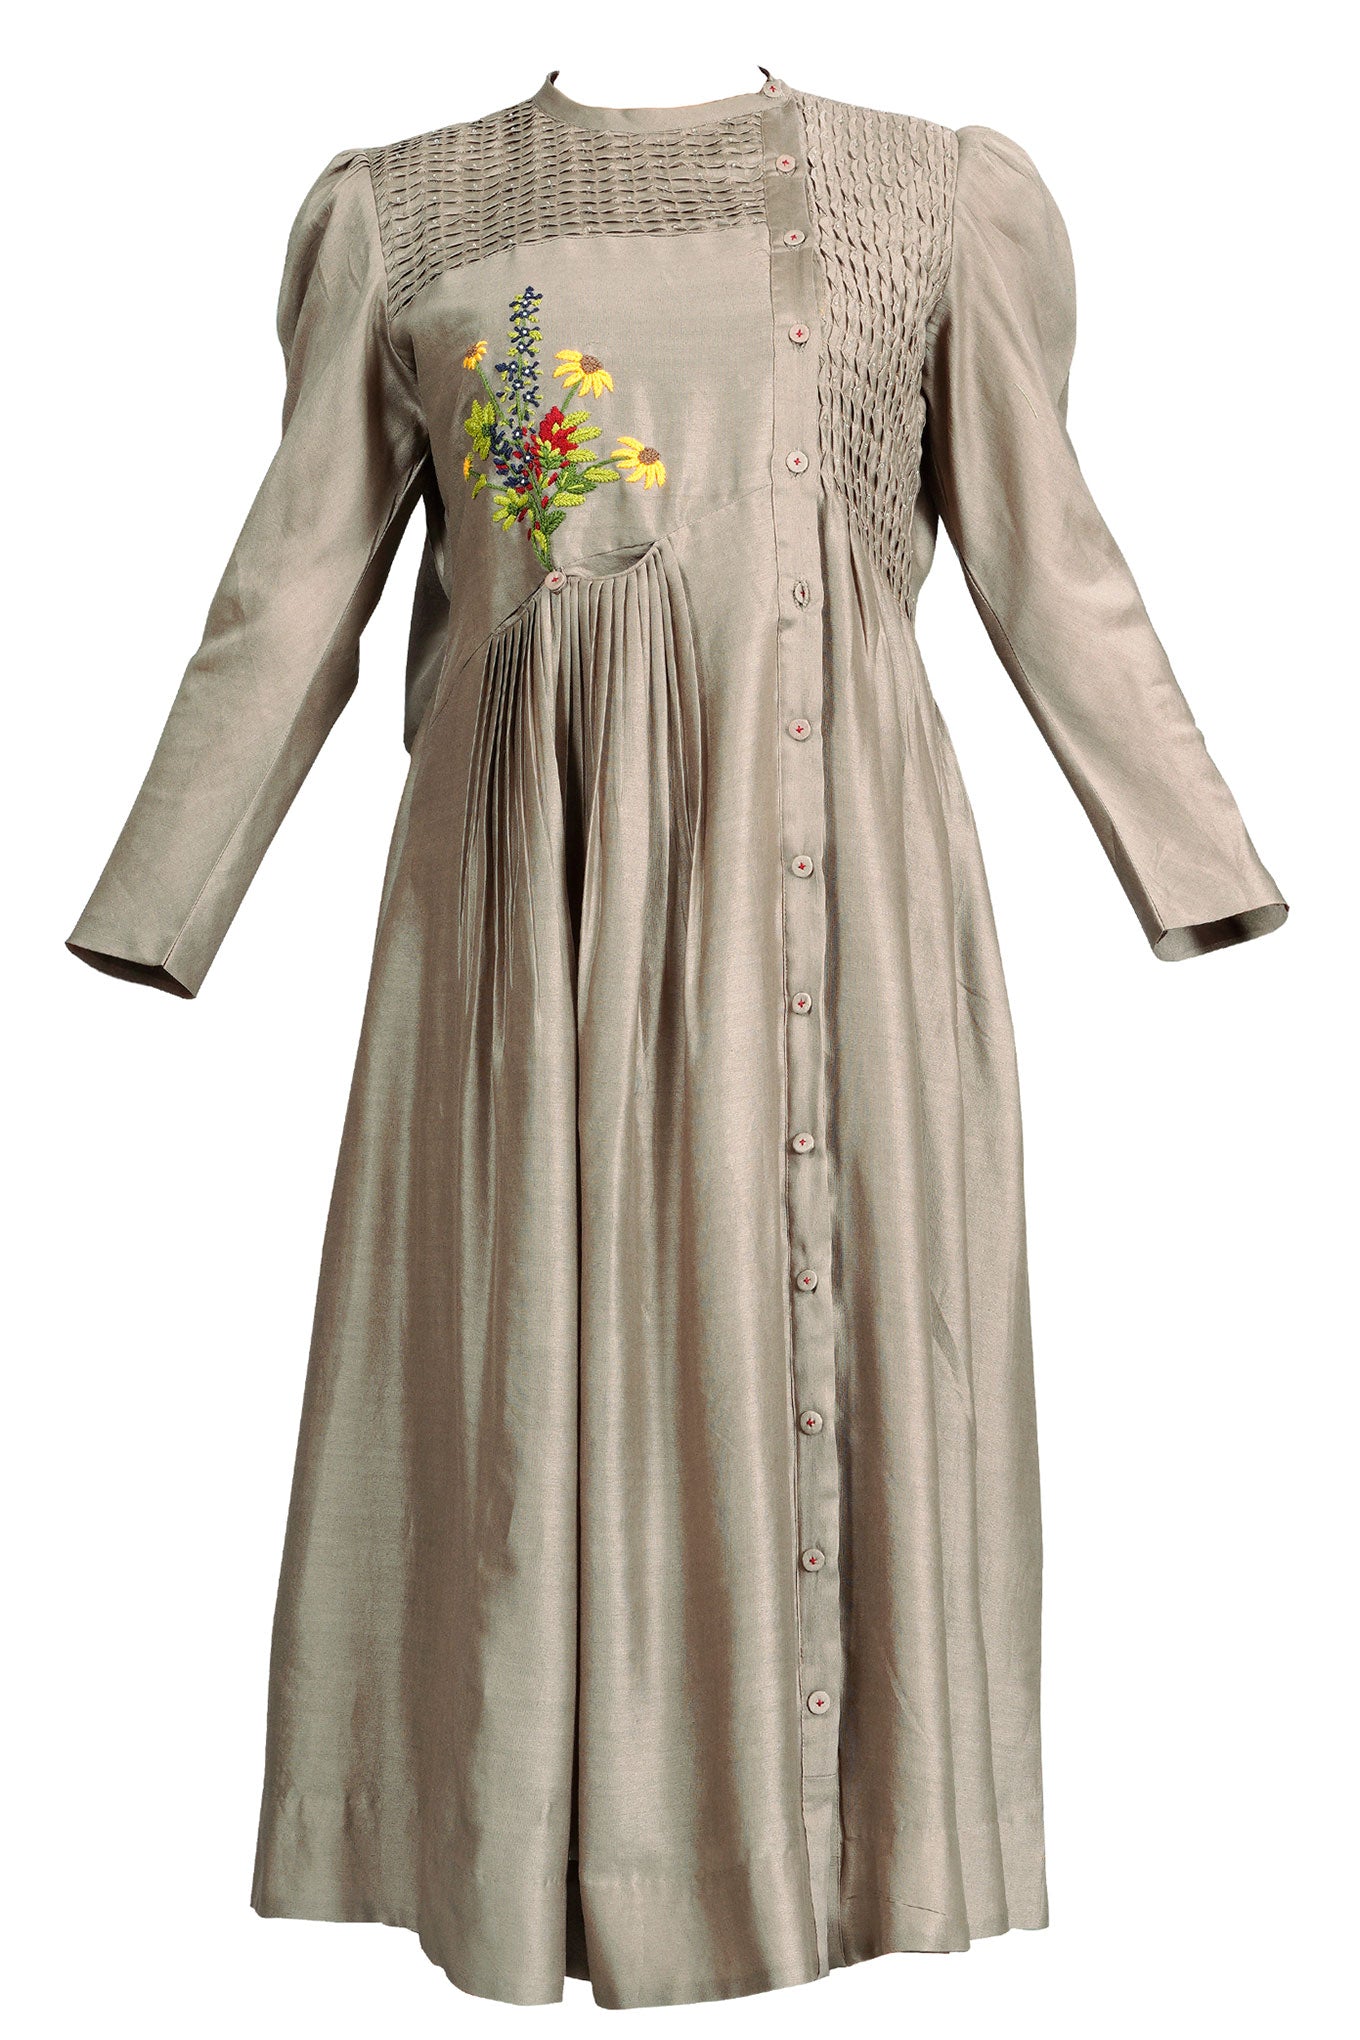 Cornflower Dress (Taupe)